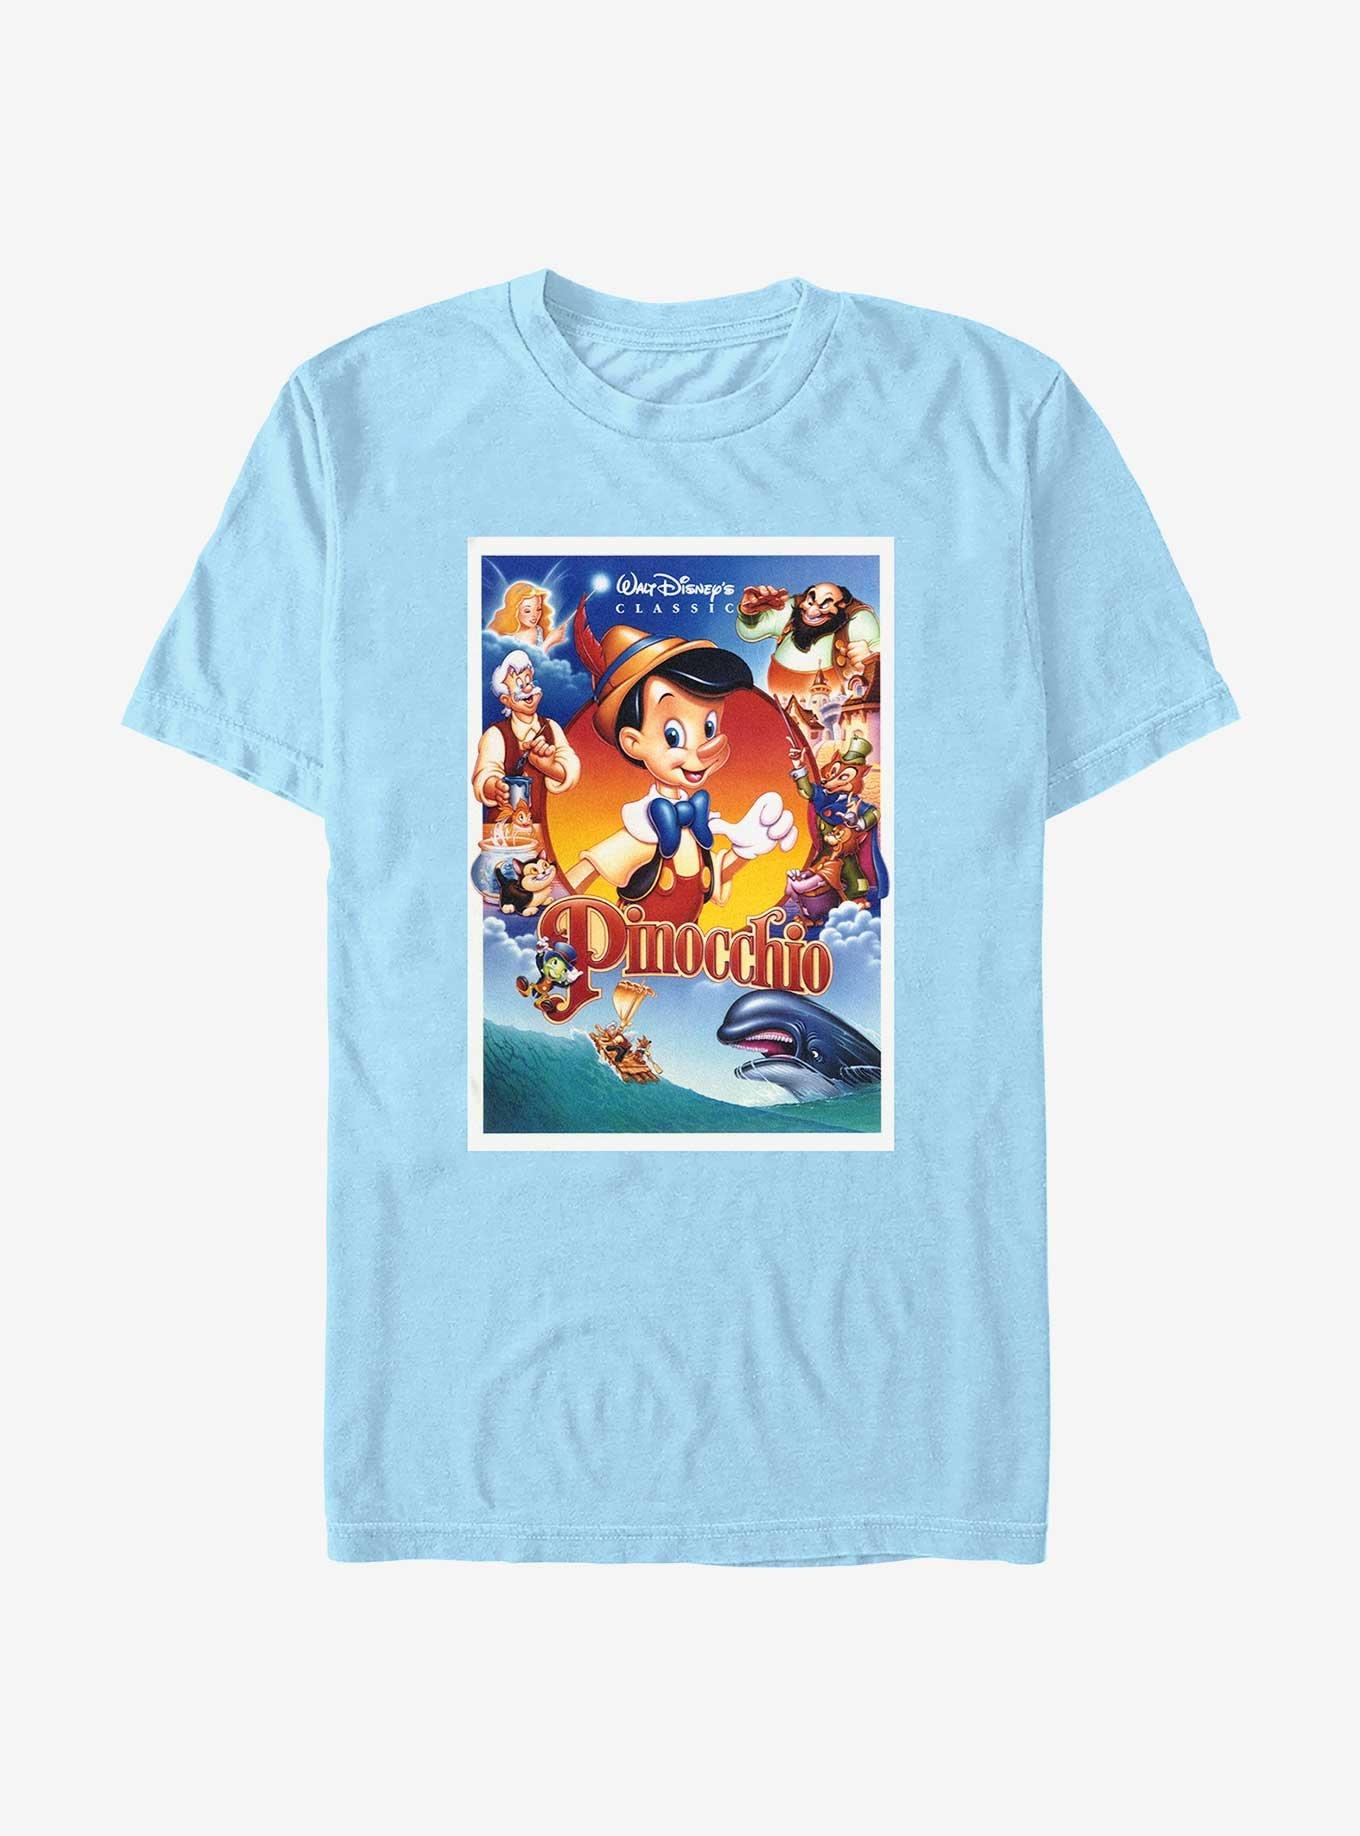 Disney Pinocchio Classic Movie Cover T-Shirt, LT BLUE, hi-res